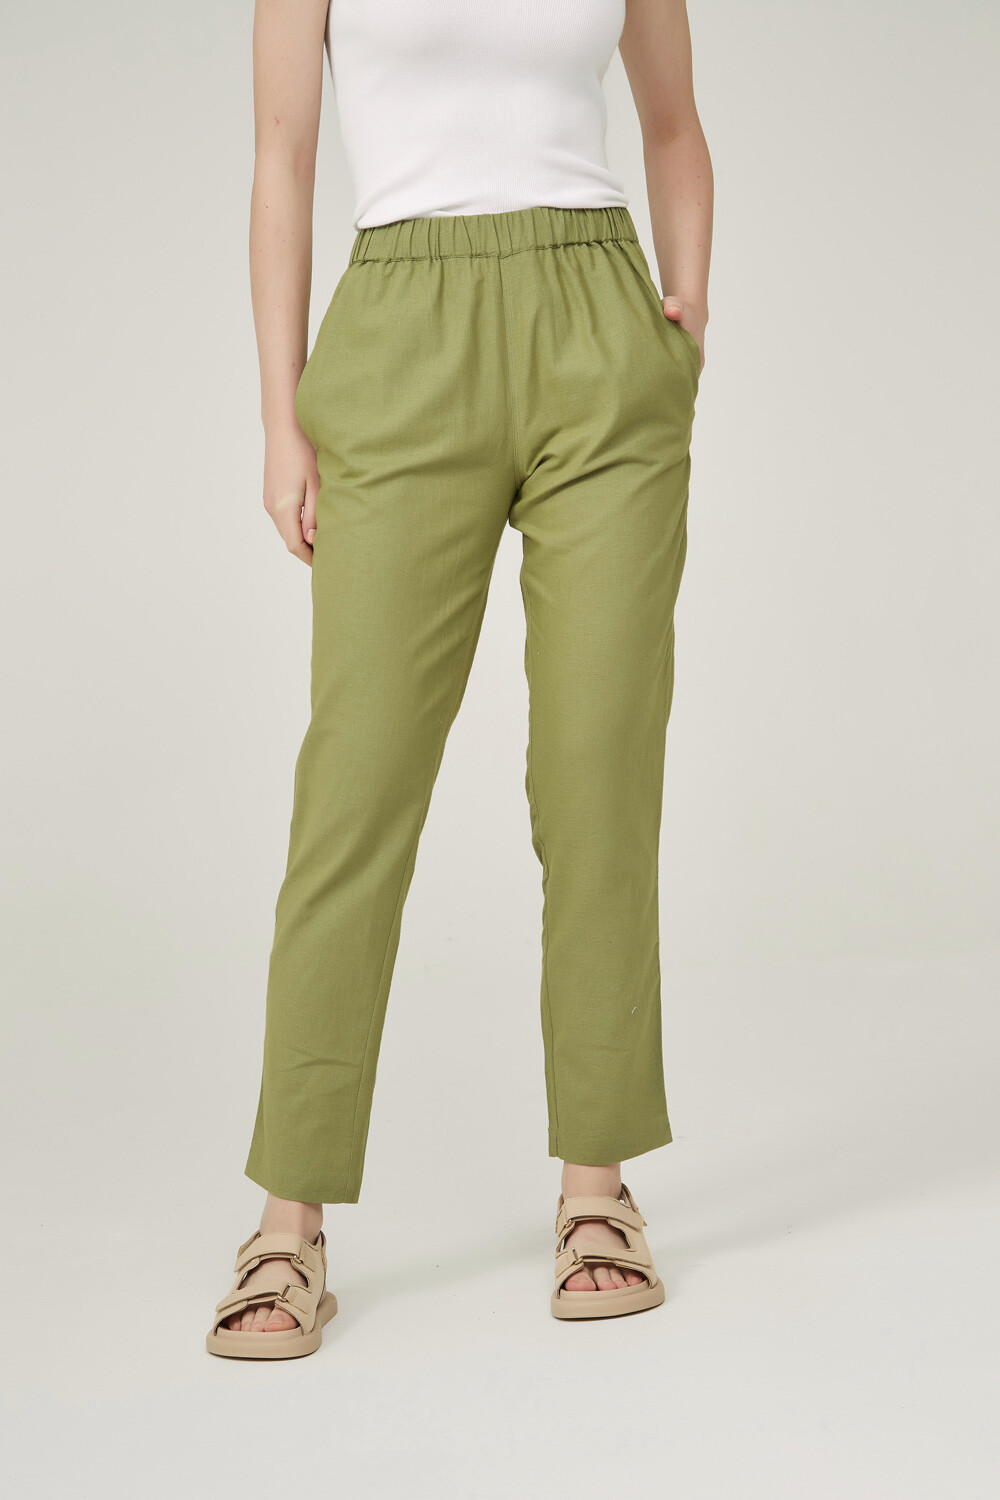 Pantalon Basilia Verde Seco